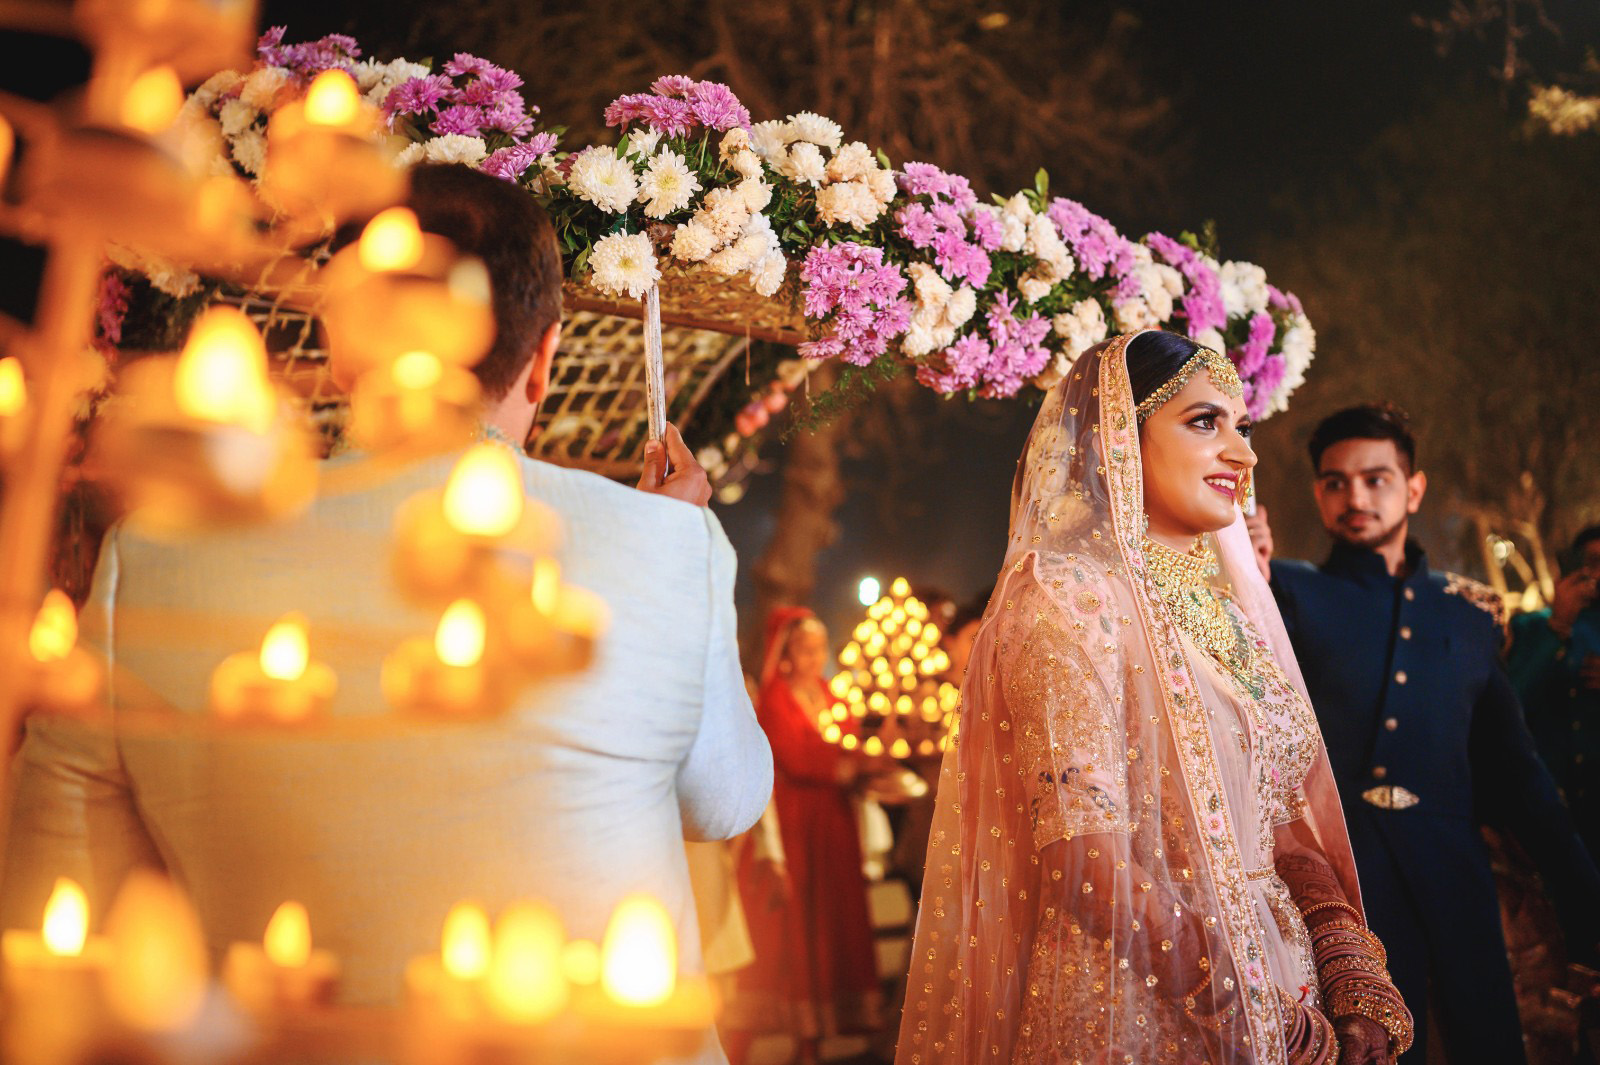 Nikhil and Juhi's wedding